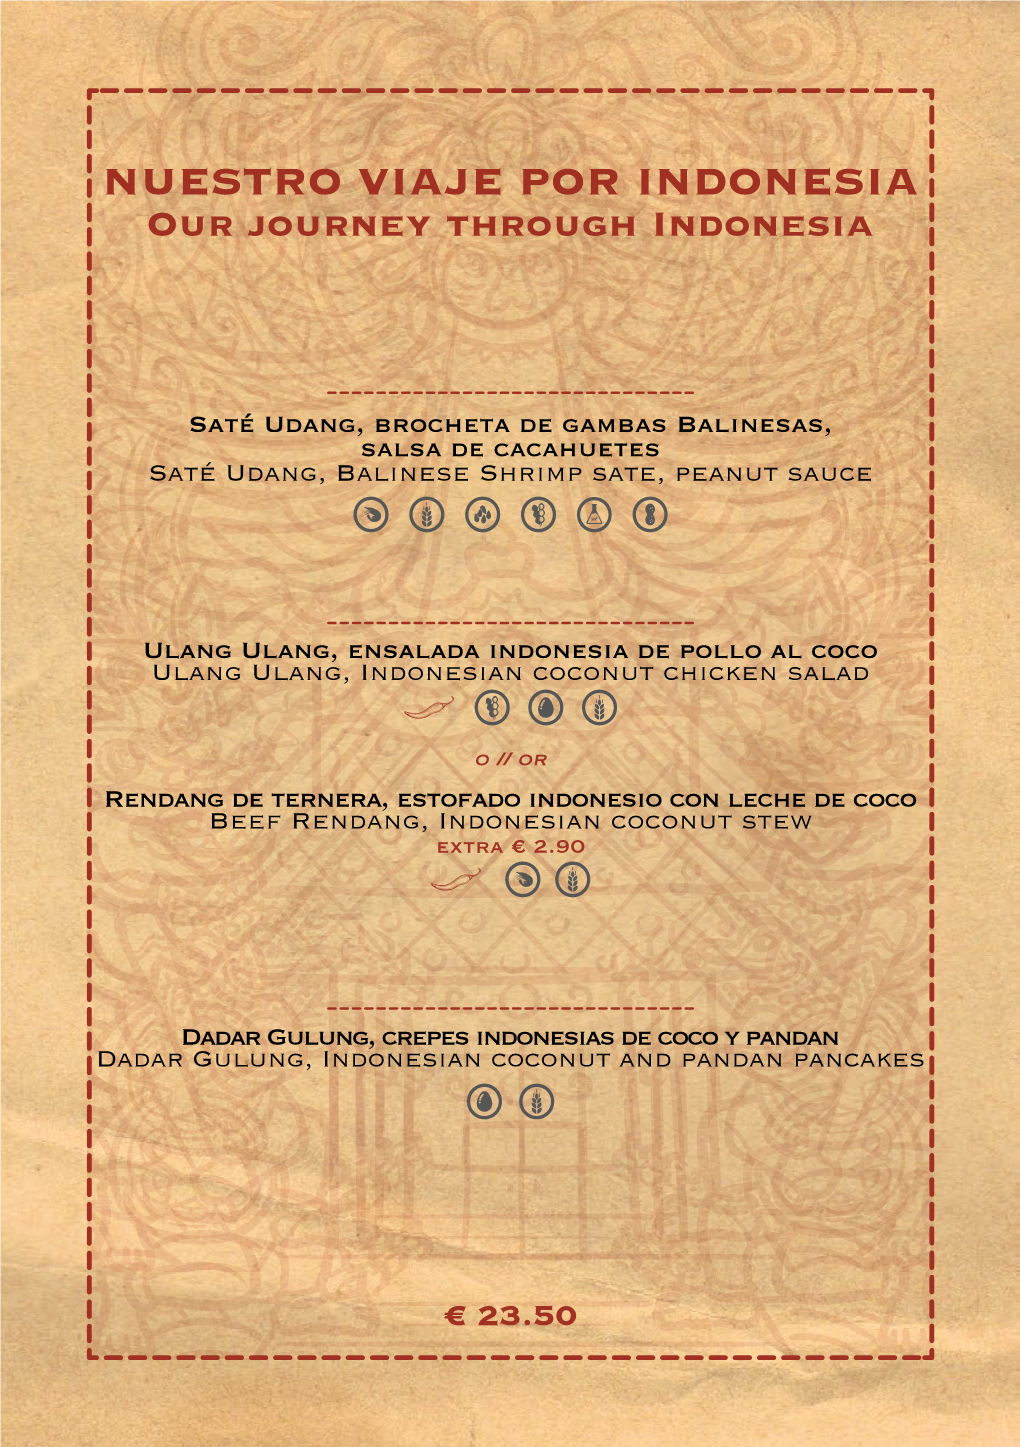 NUESTRO VIAJE POR INDONESIA Our Journey Through Indonesia